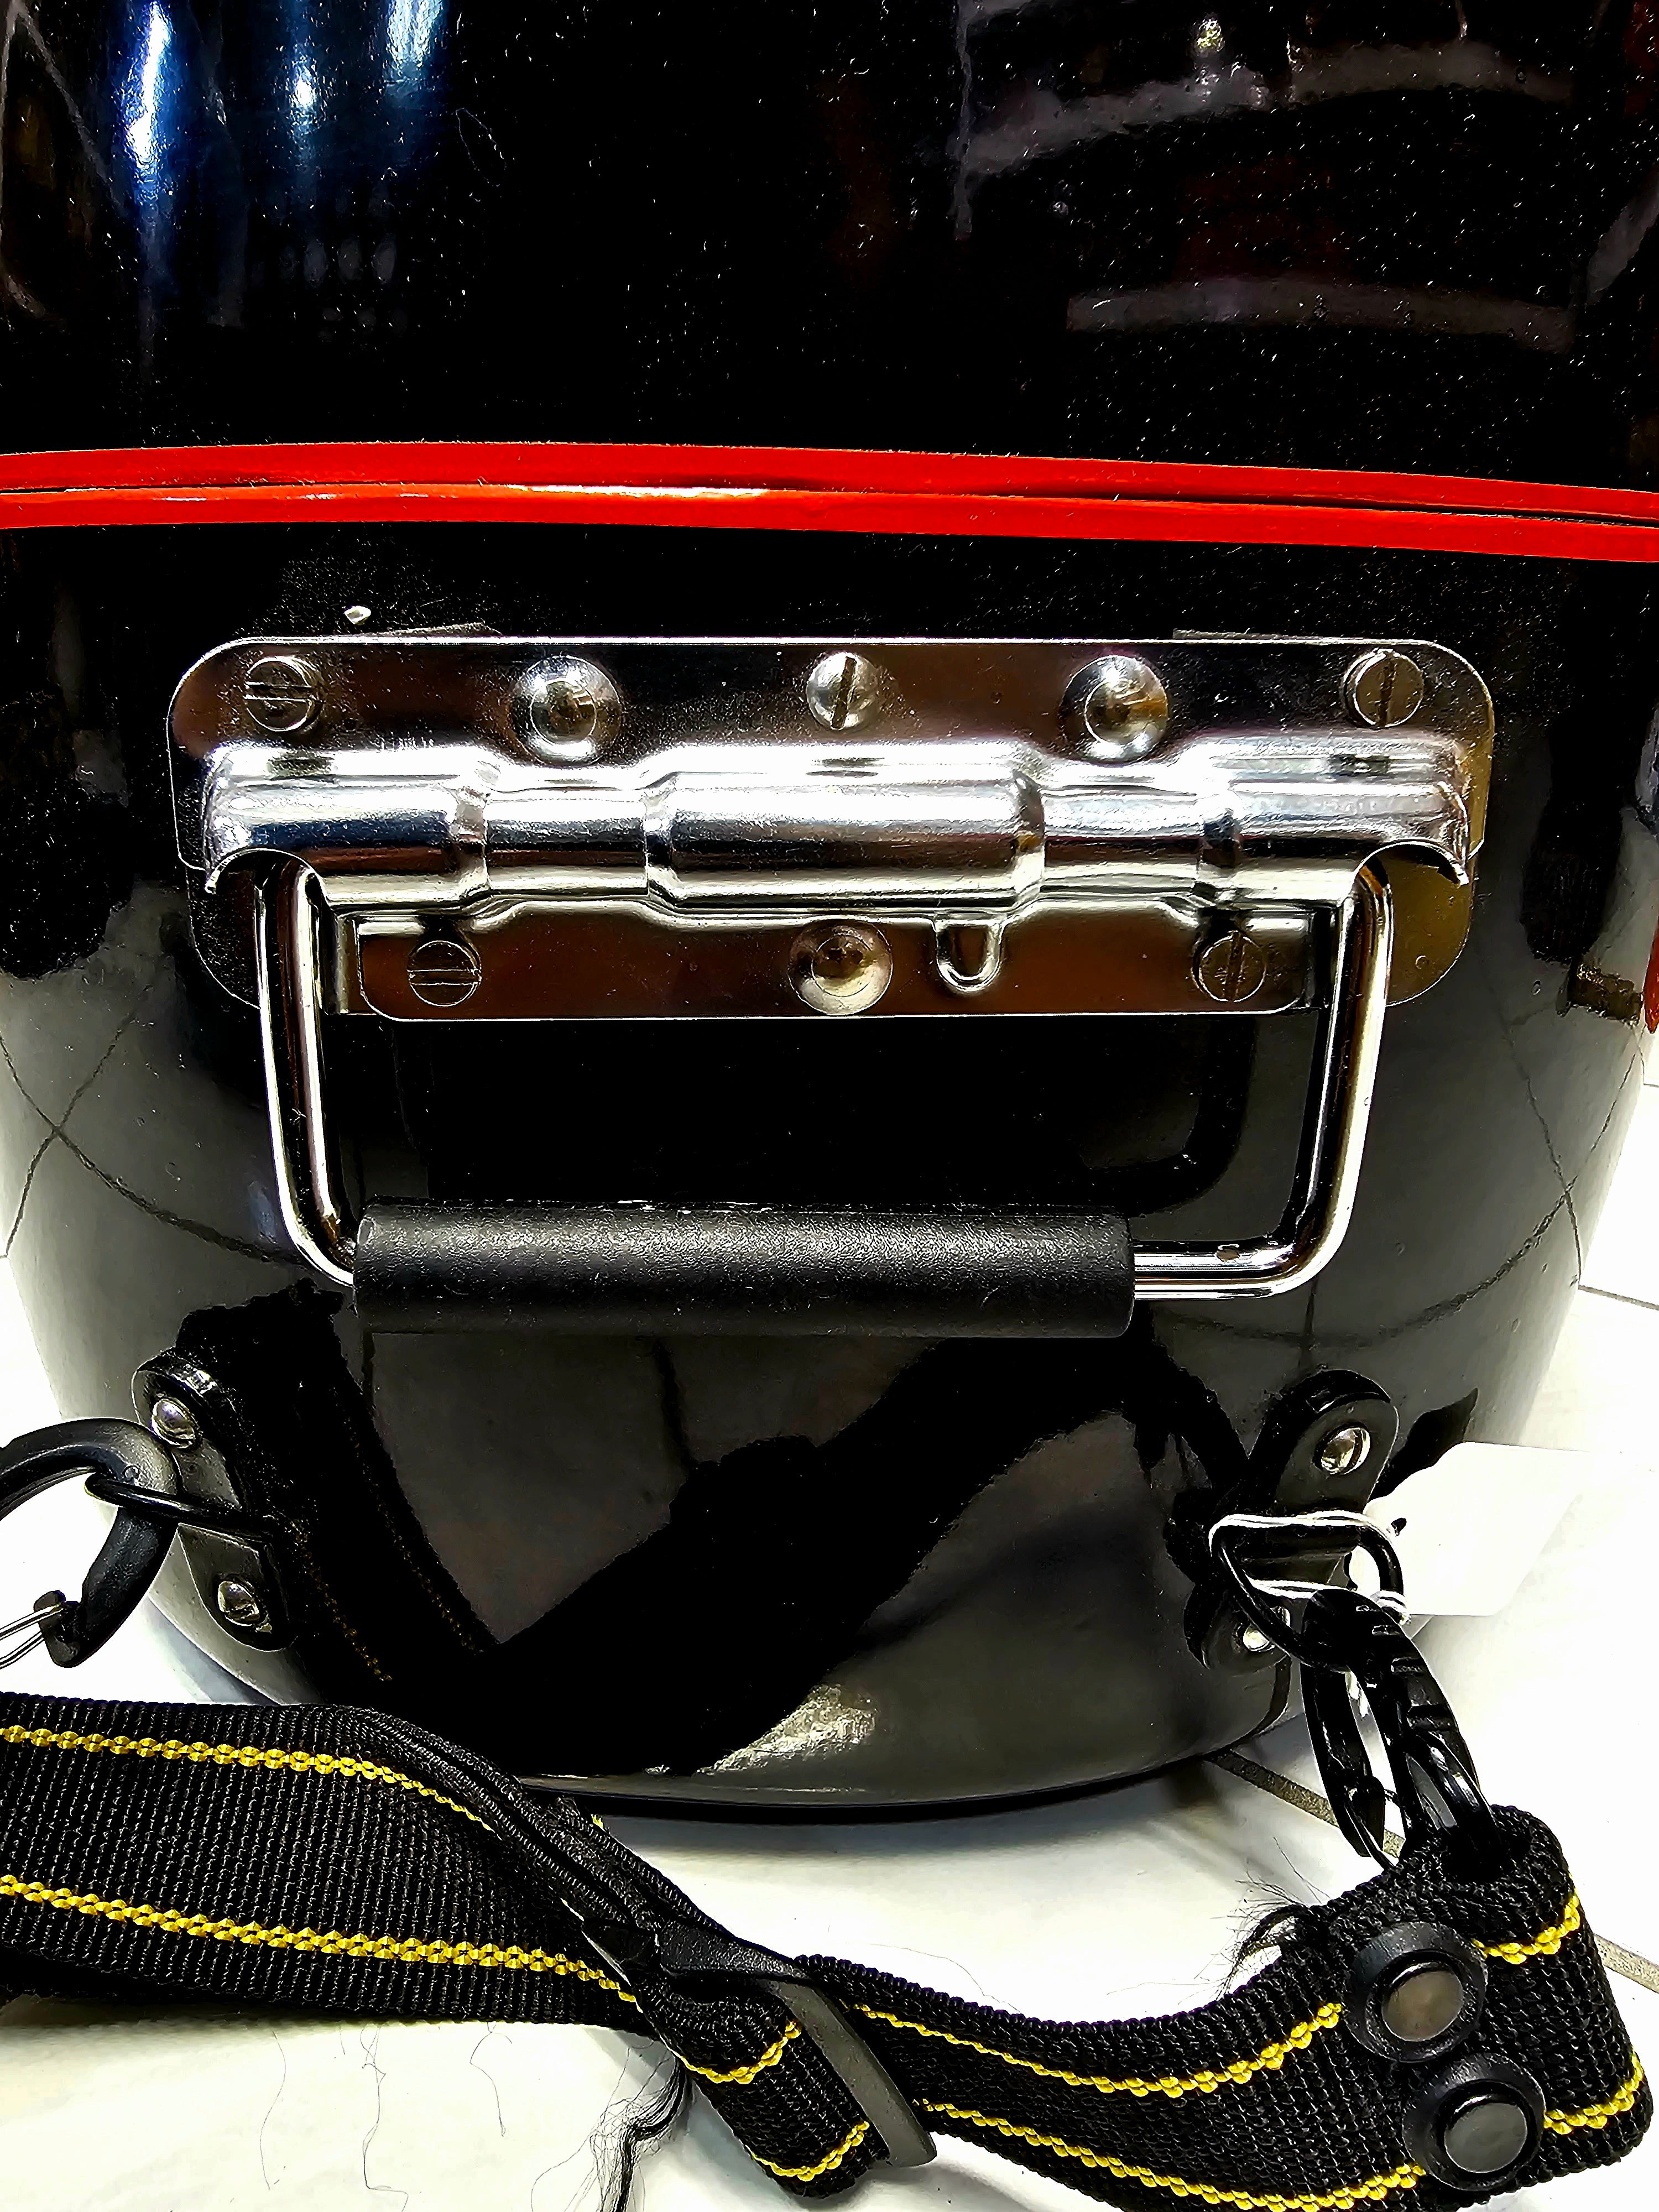 Rhythmic Roamer Tabla Traveler - A Black Hard Travel Case with Handle, Wheels, and Rich Red Felt Interior!